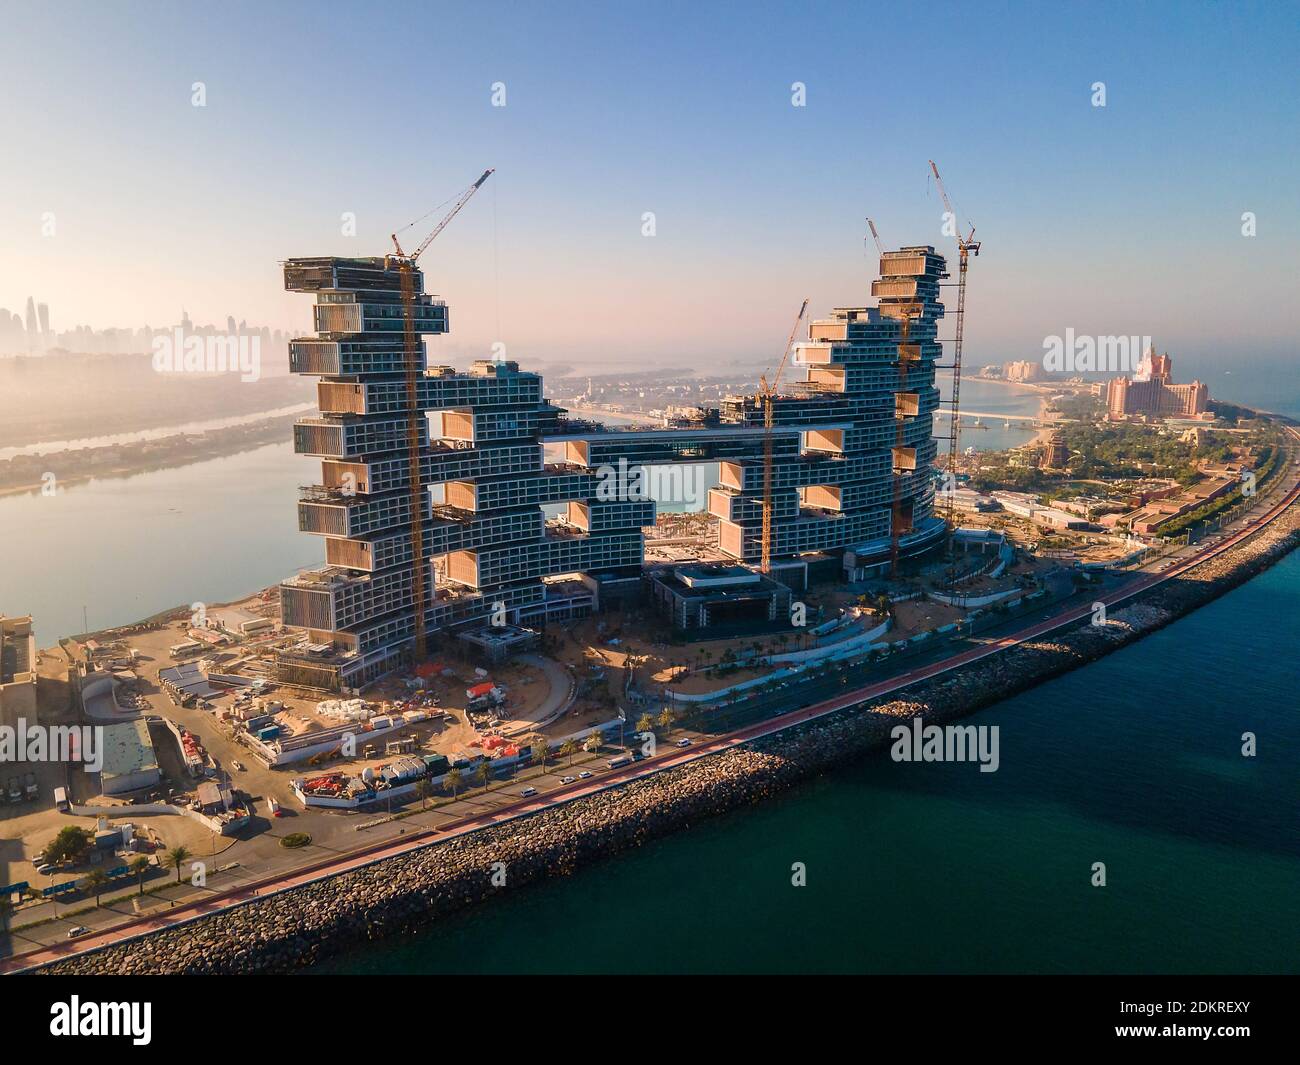 Dubai, United Arab Emirates - December 1, 2020: The Royal Atlantis Resort & Residences under construction on the Palm Jumeirah island in Dubai United Stock Photo